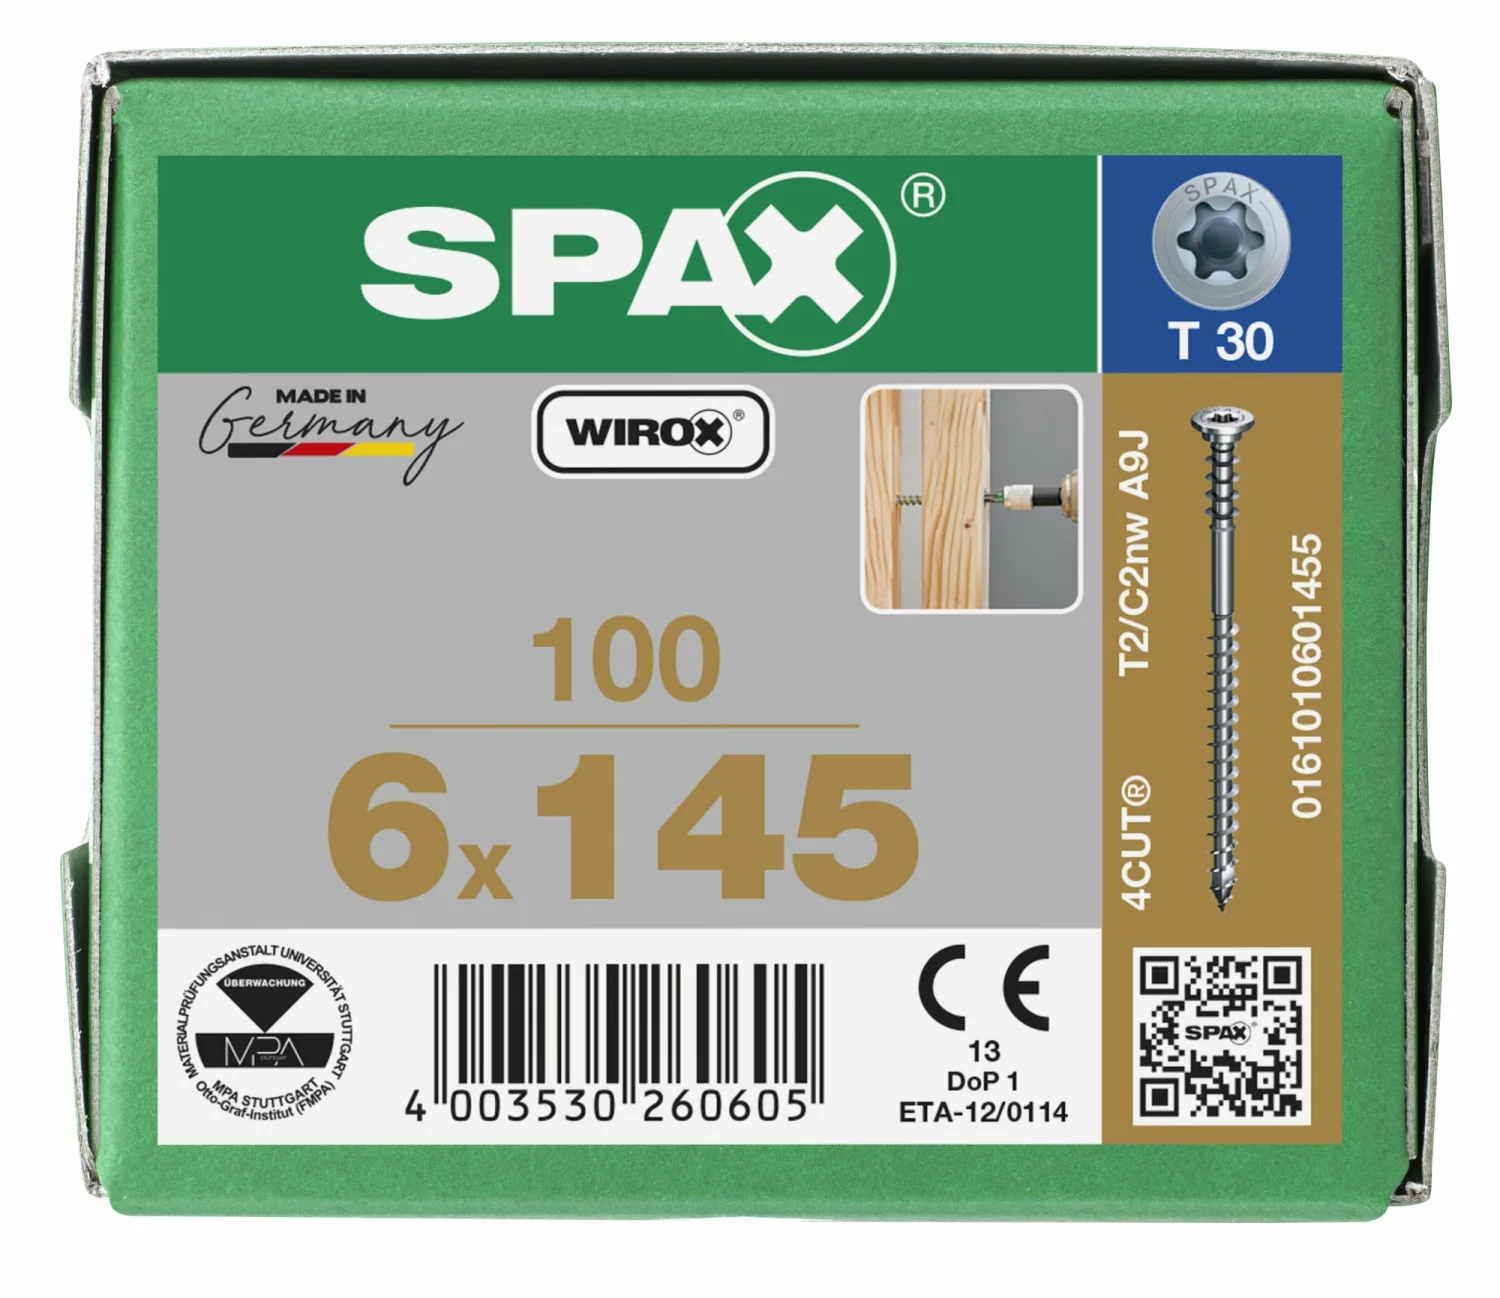 SPAX 161010601455 Stelschroef, Platkop, 6 x 145, Deeldraad, T-STAR plus TX30 - WIROX - 100 stuks-image